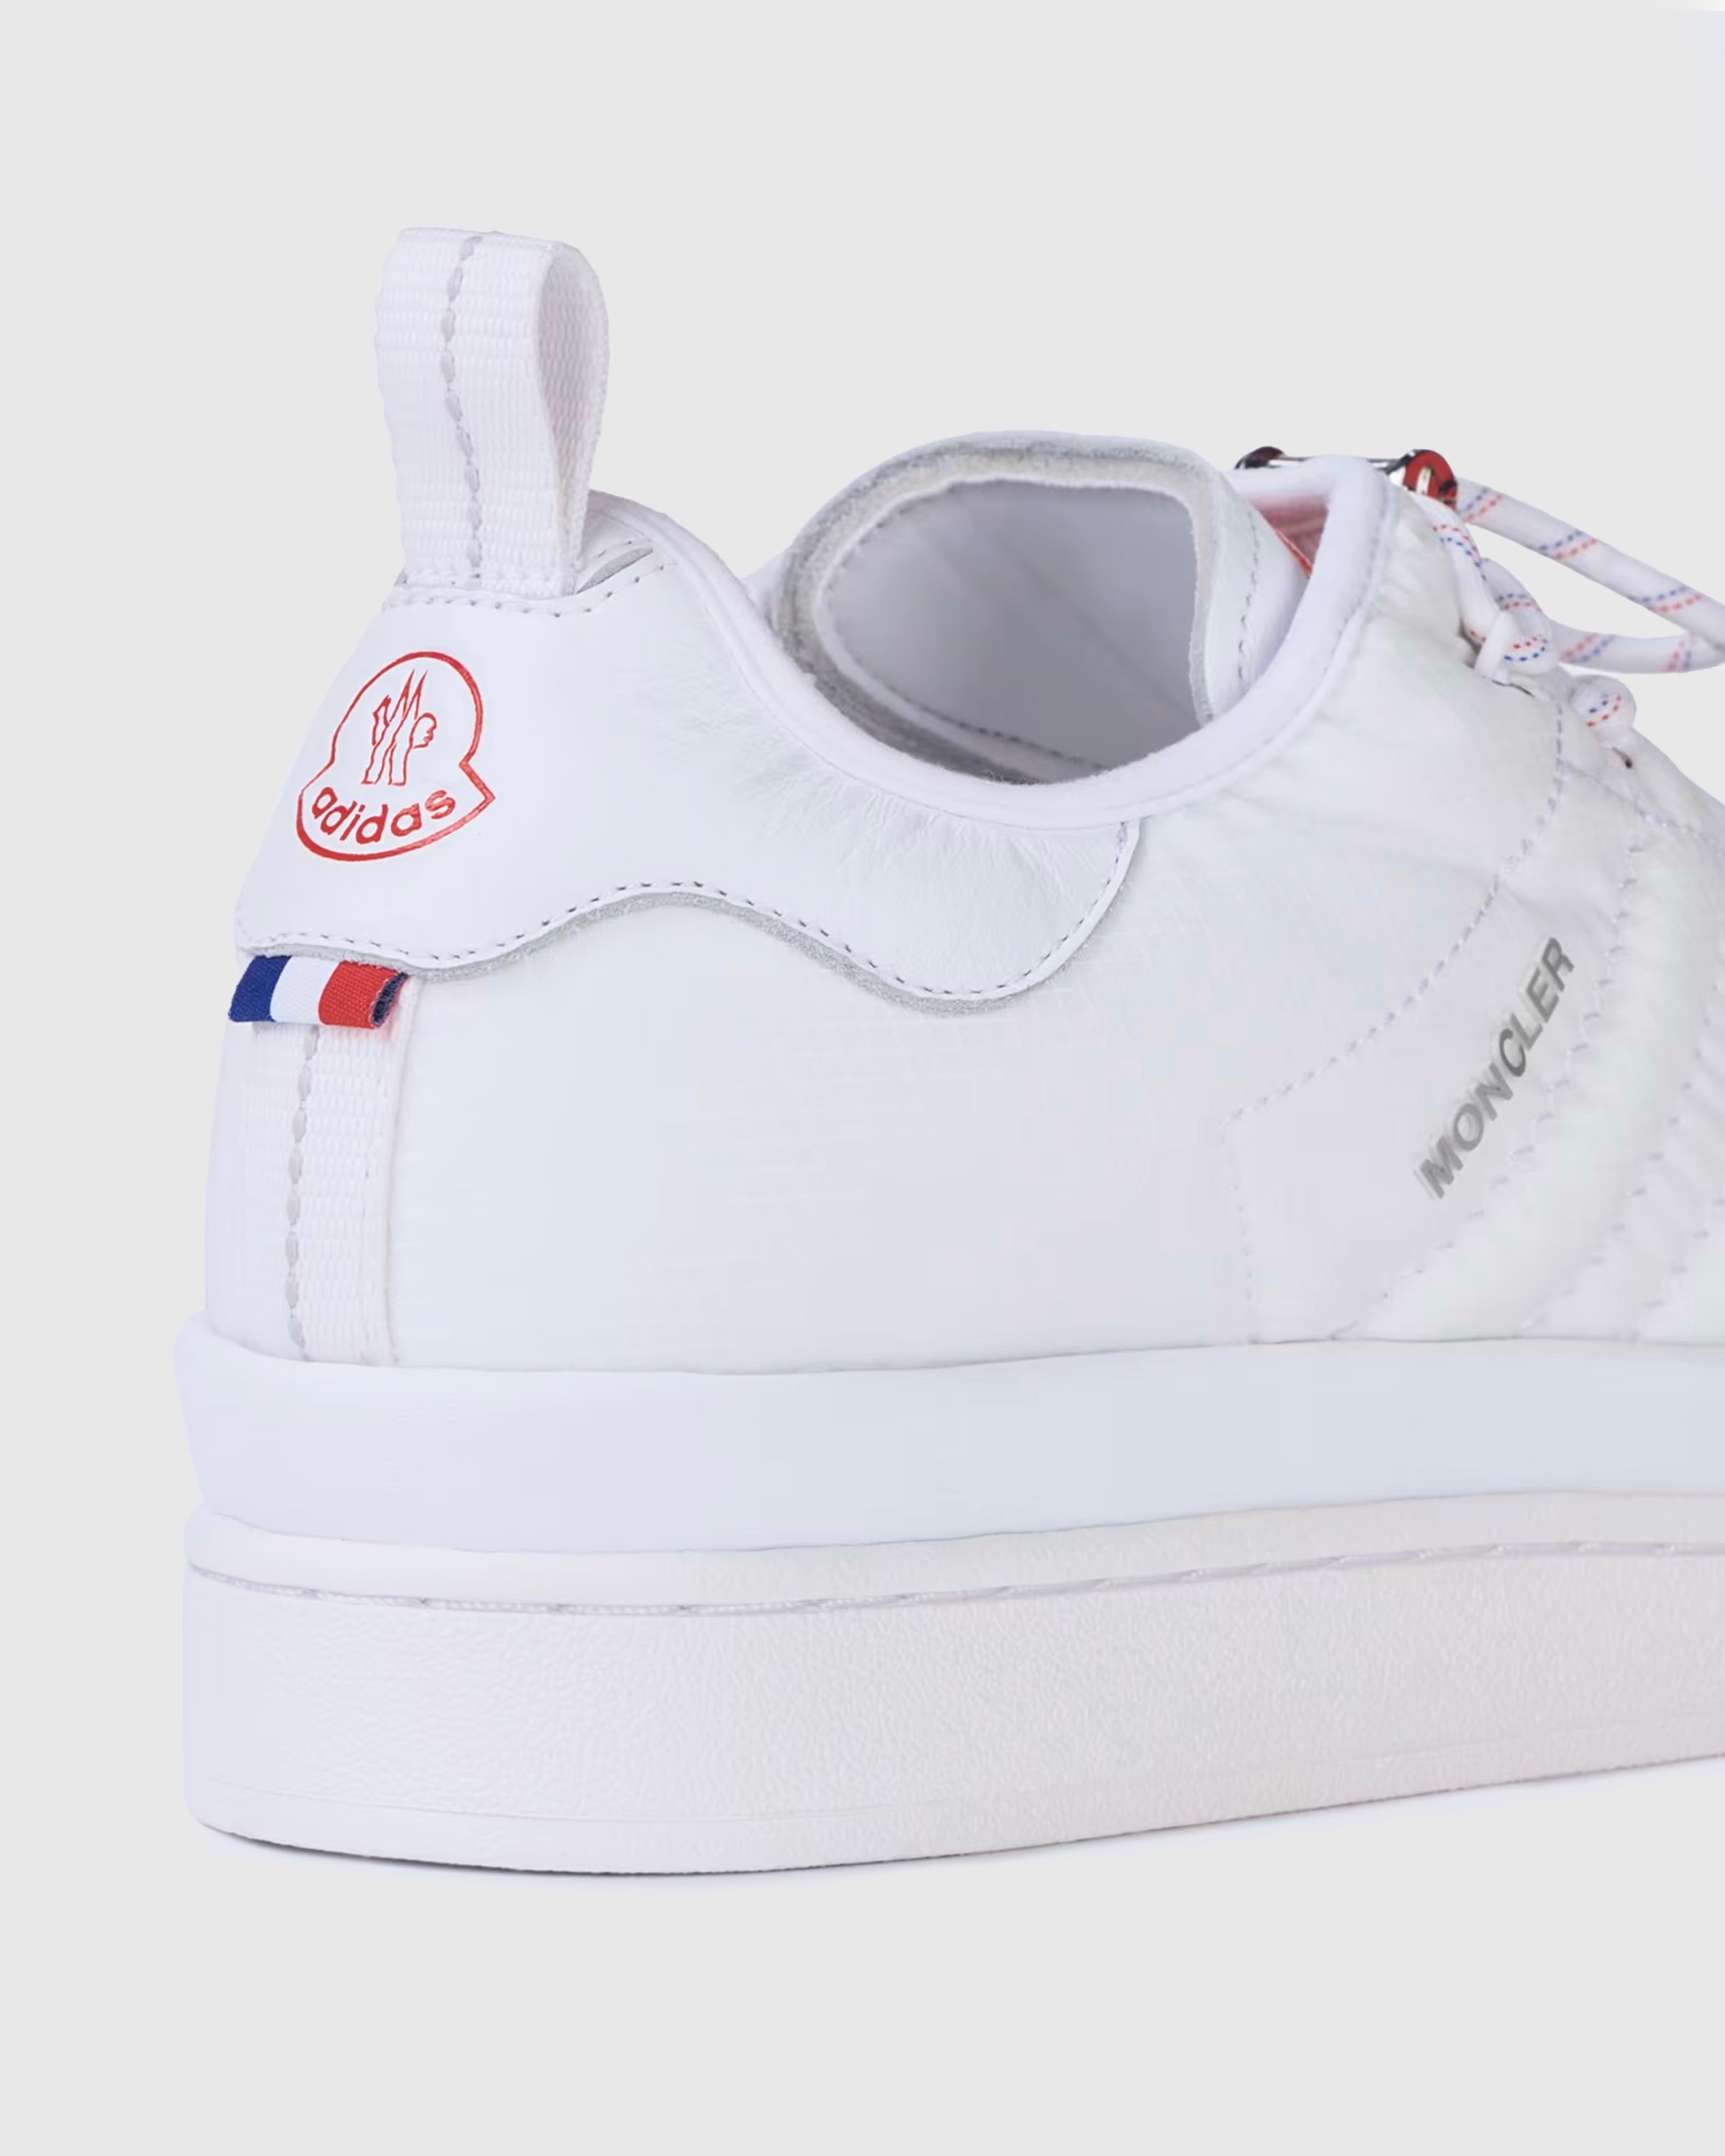 Moncler x adidas Originals - Campus Low Top Sneakers - Footwear - White - Image 4